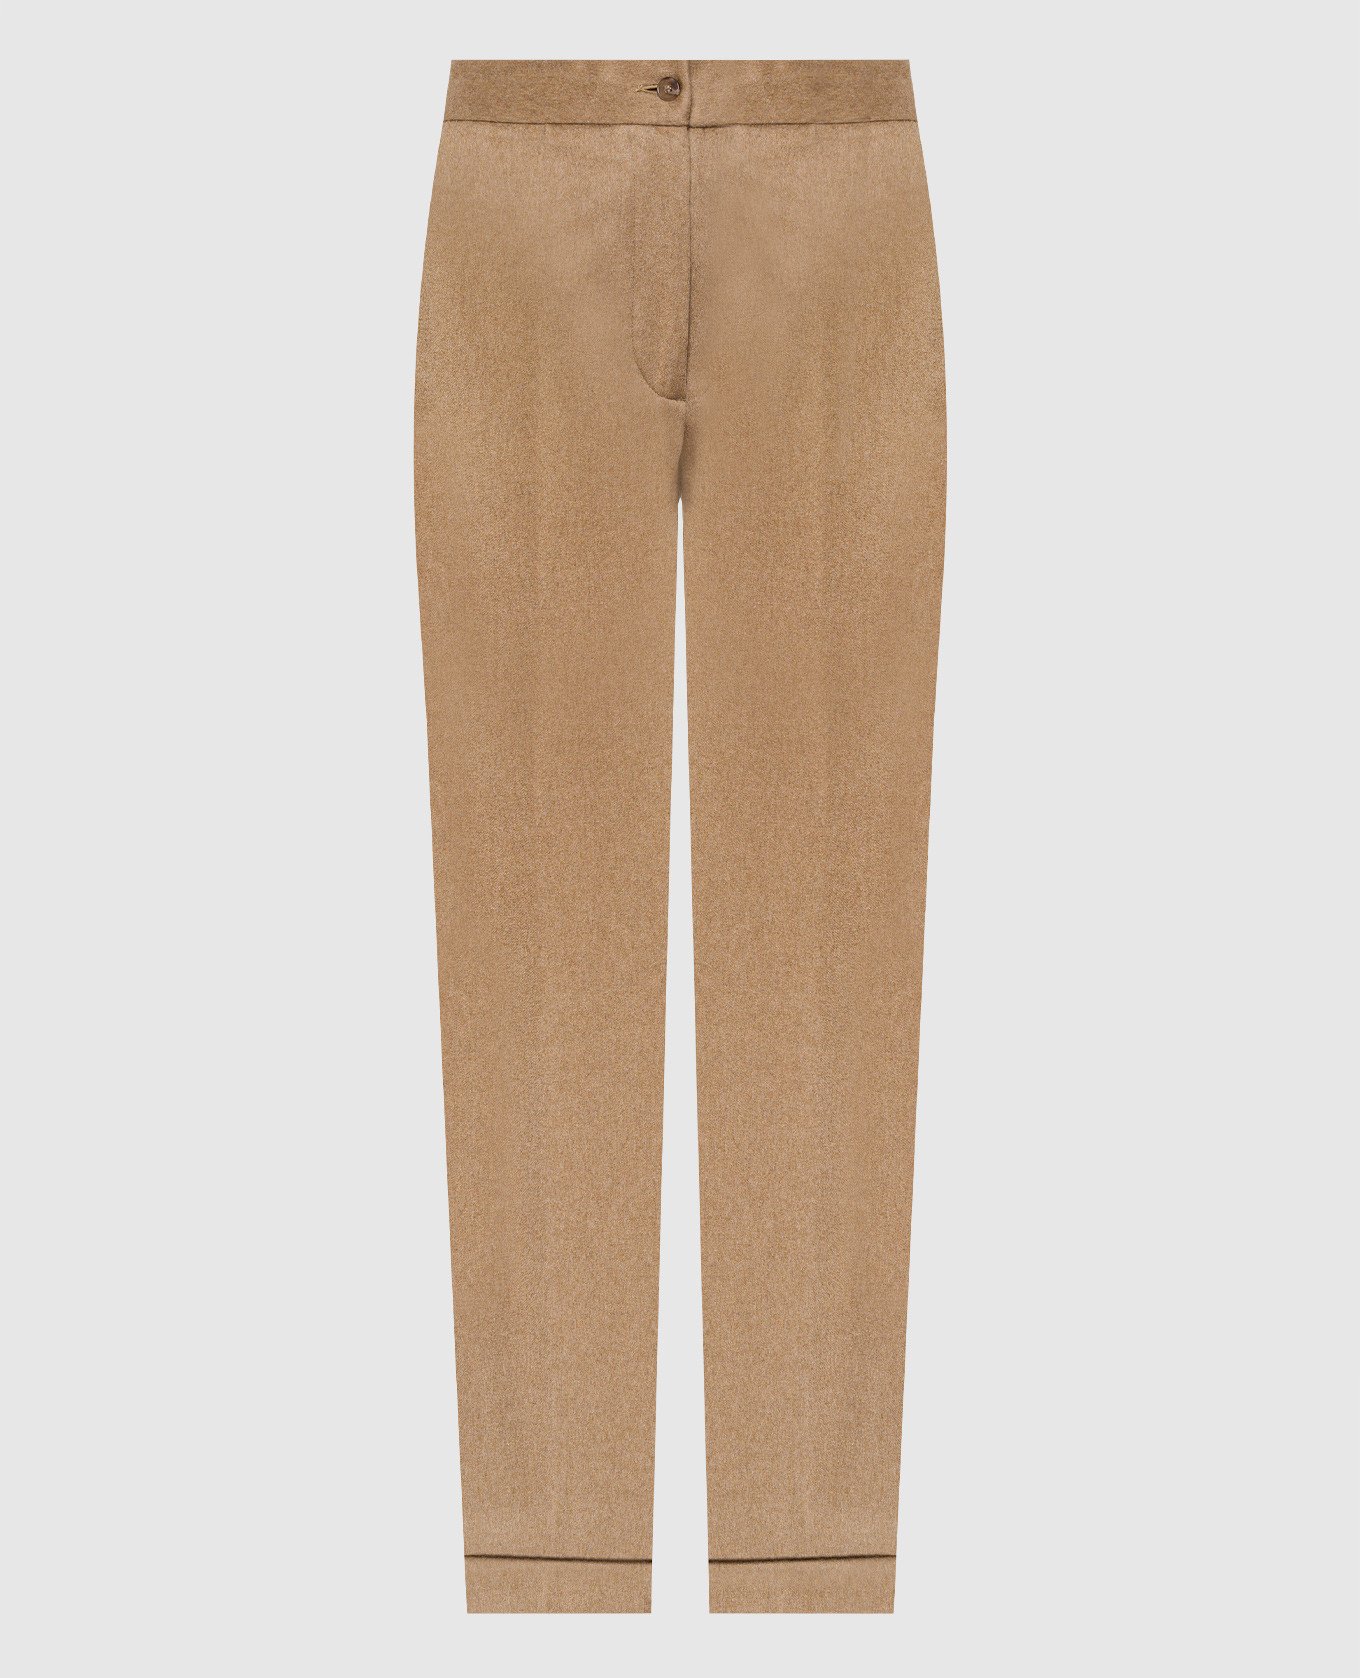 Brown cashmere pants